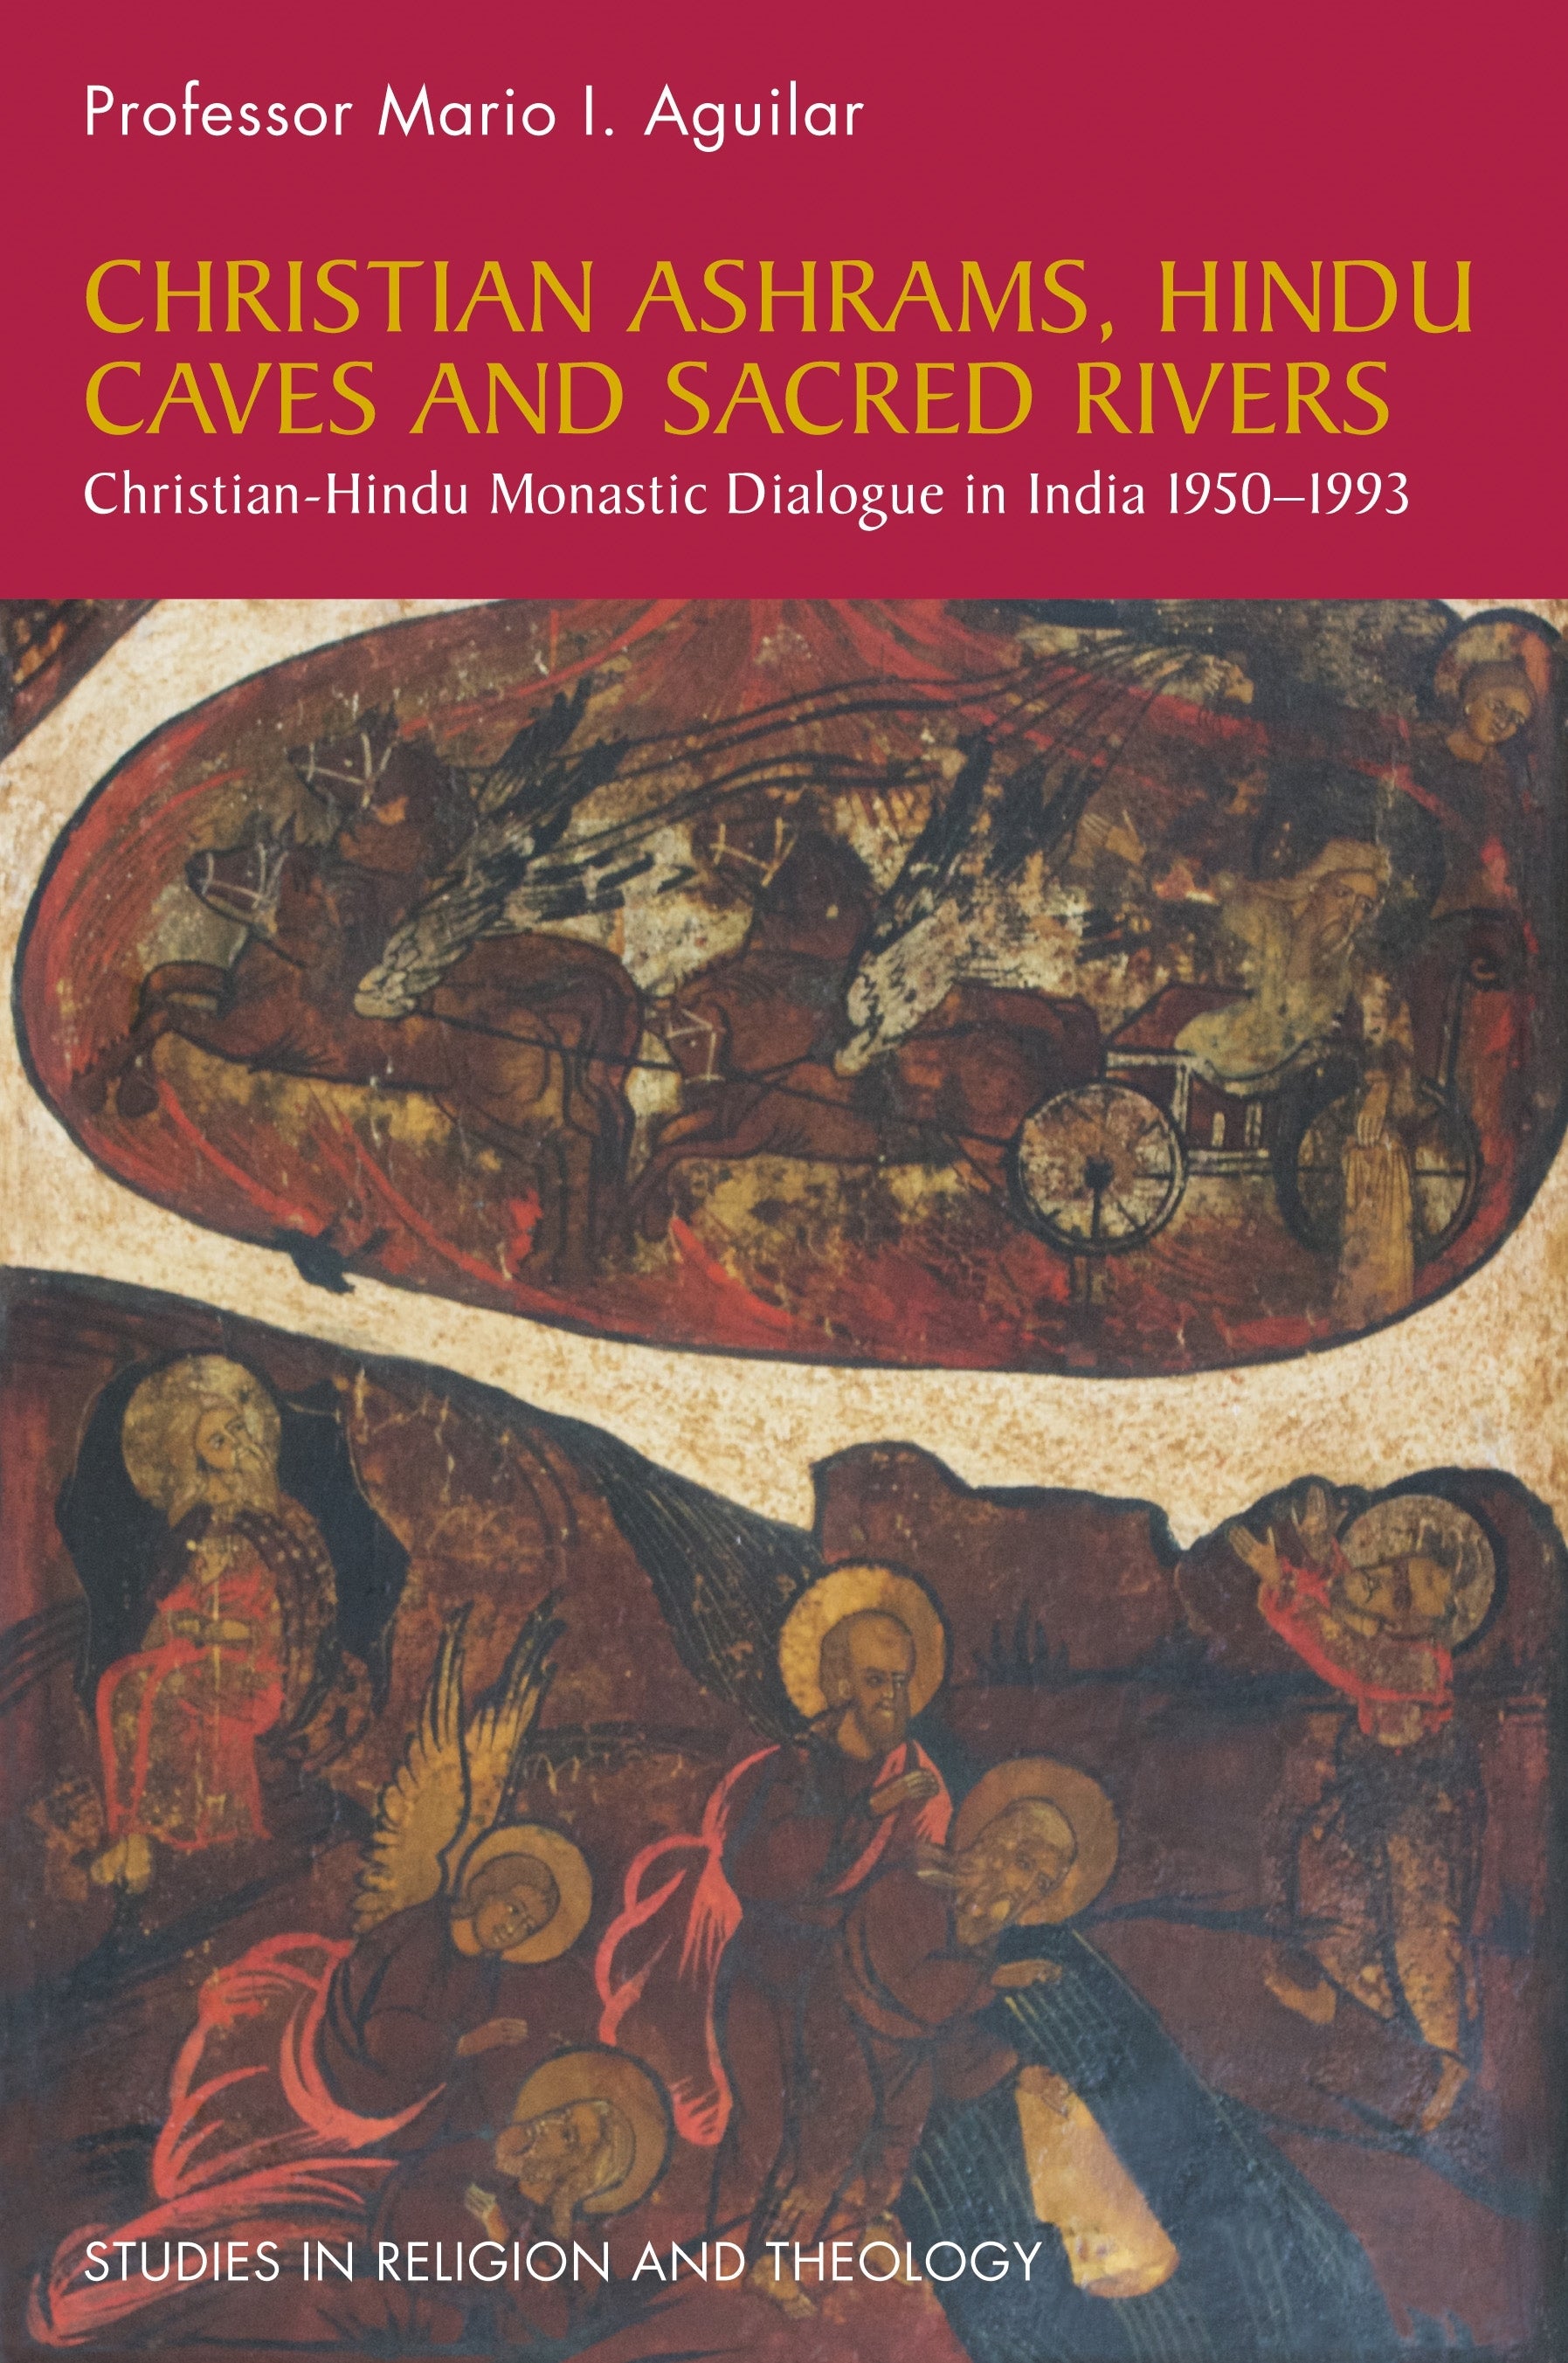 Christian Ashrams, Hindu Caves and Sacred Rivers by Mario I. Aguilar